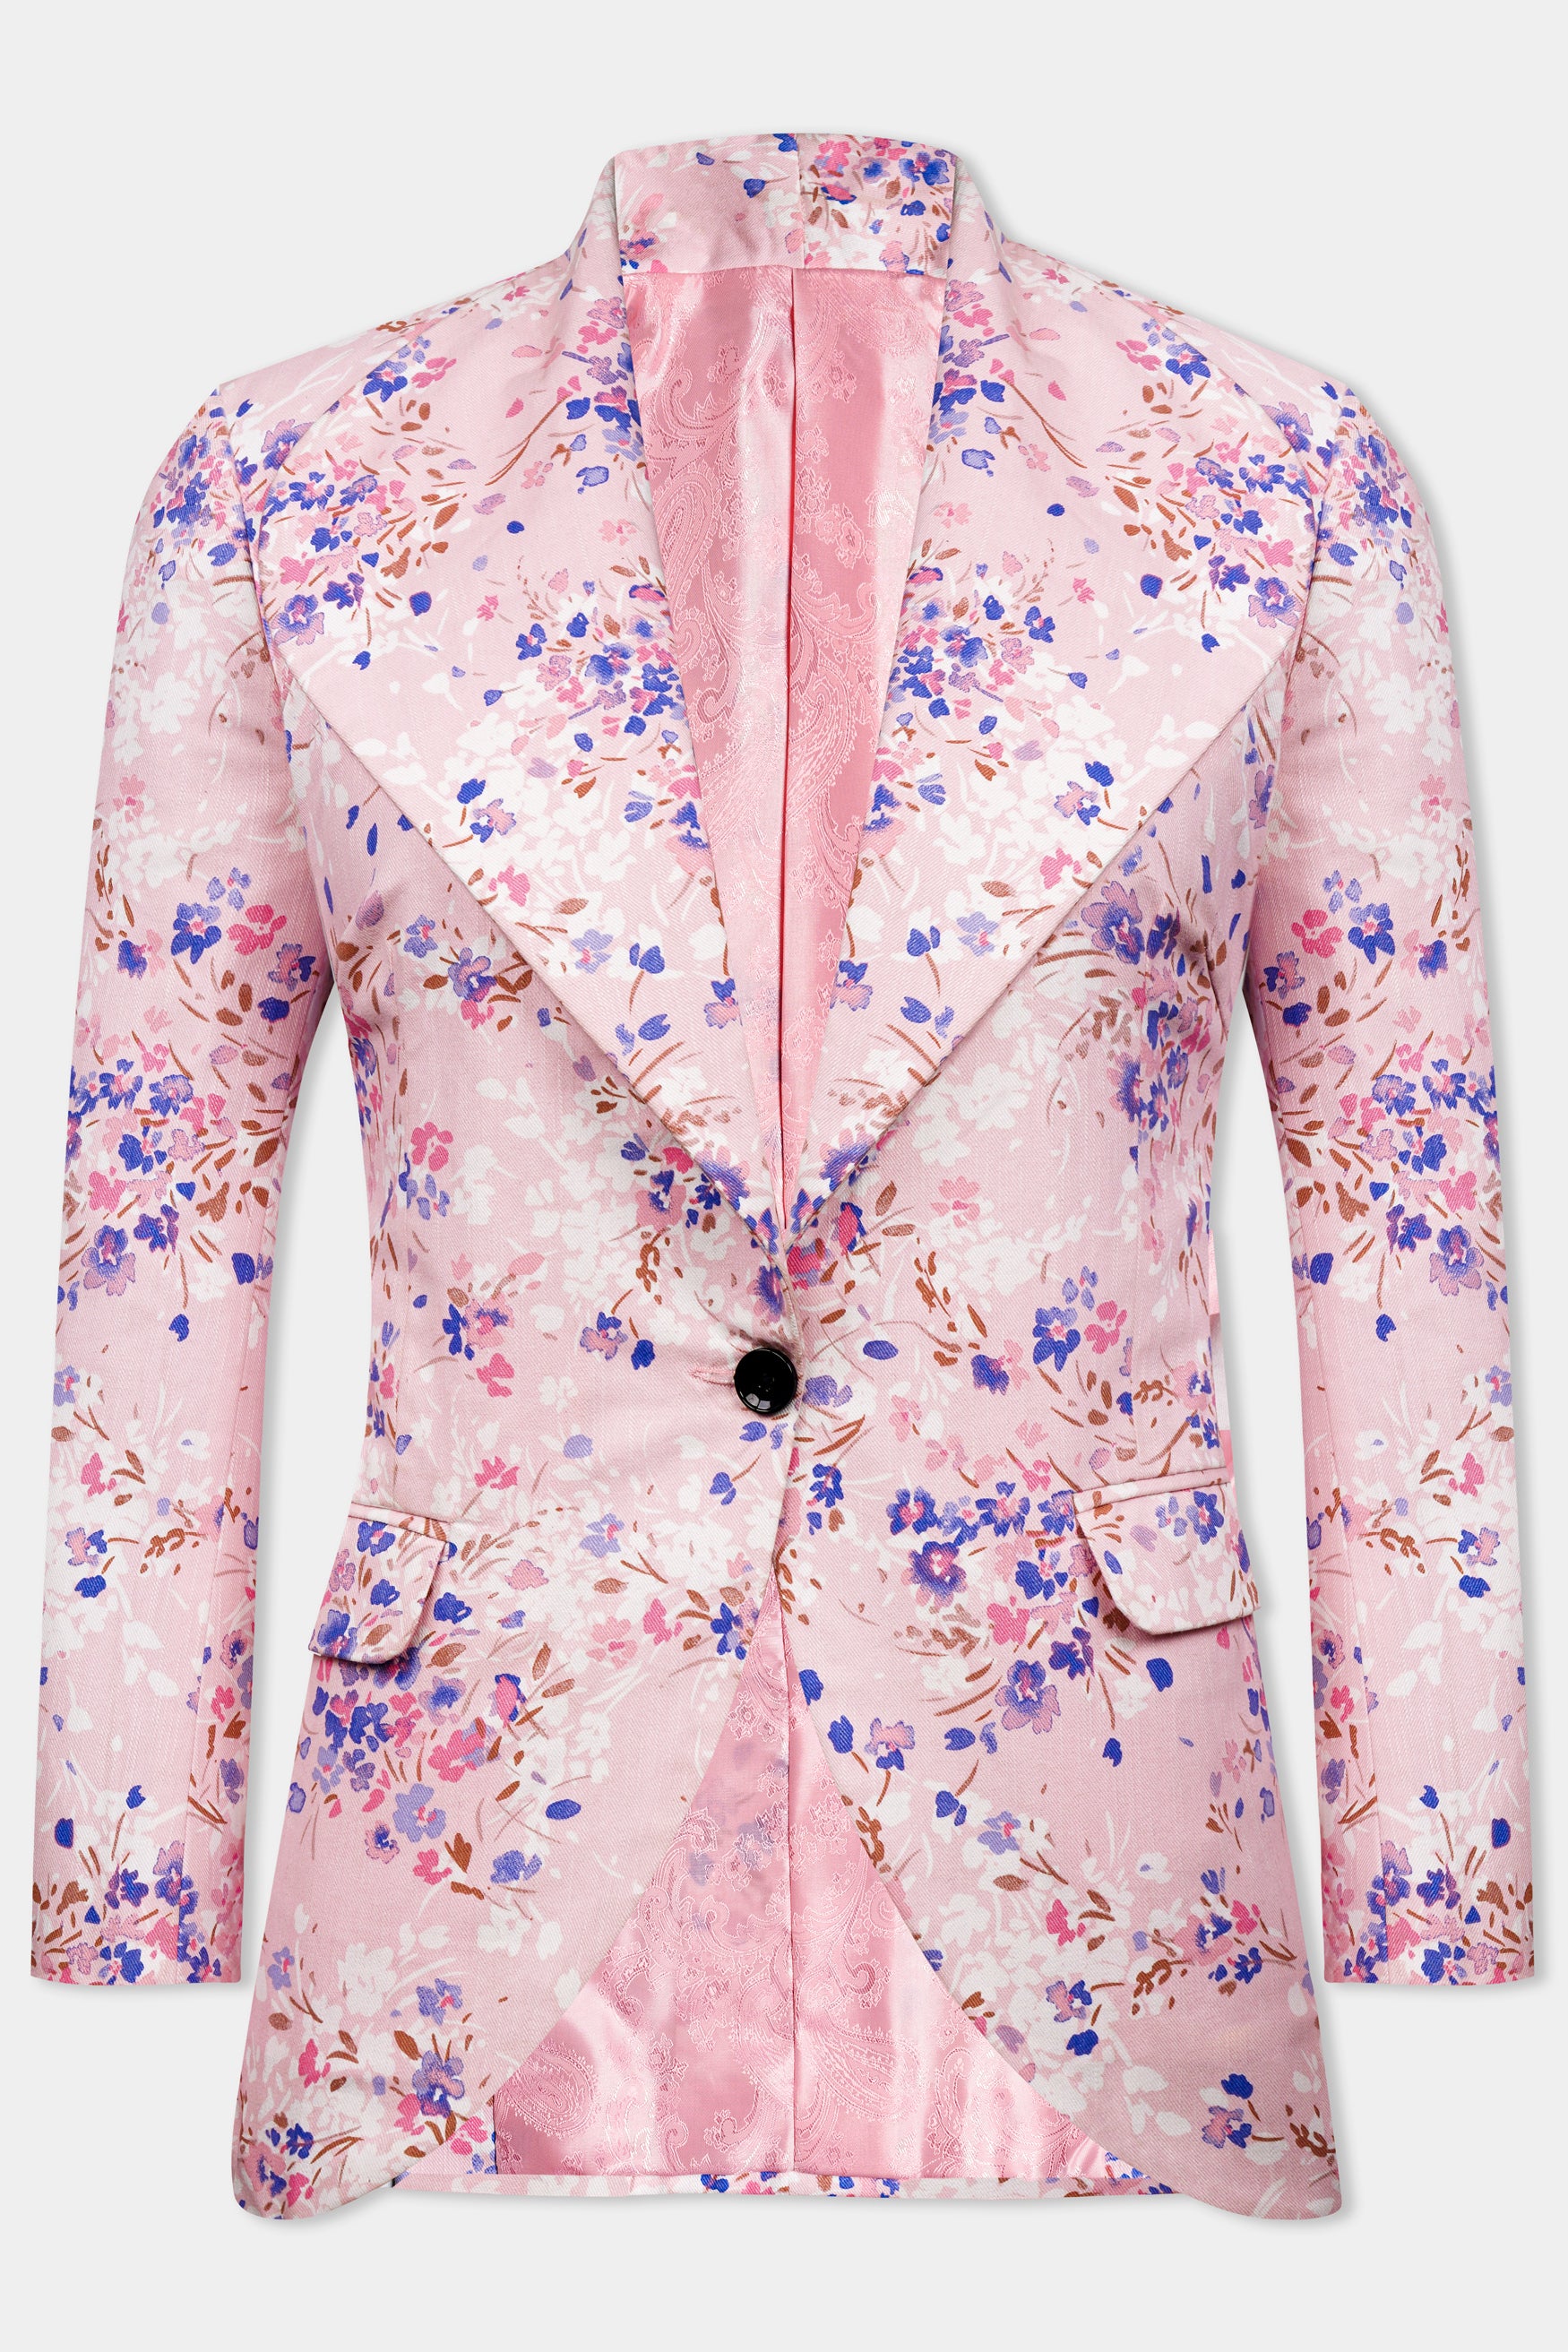 Gainsboro Pink and Scampi Blue Prints Premium Cotton Tuxedo Suit for Women.